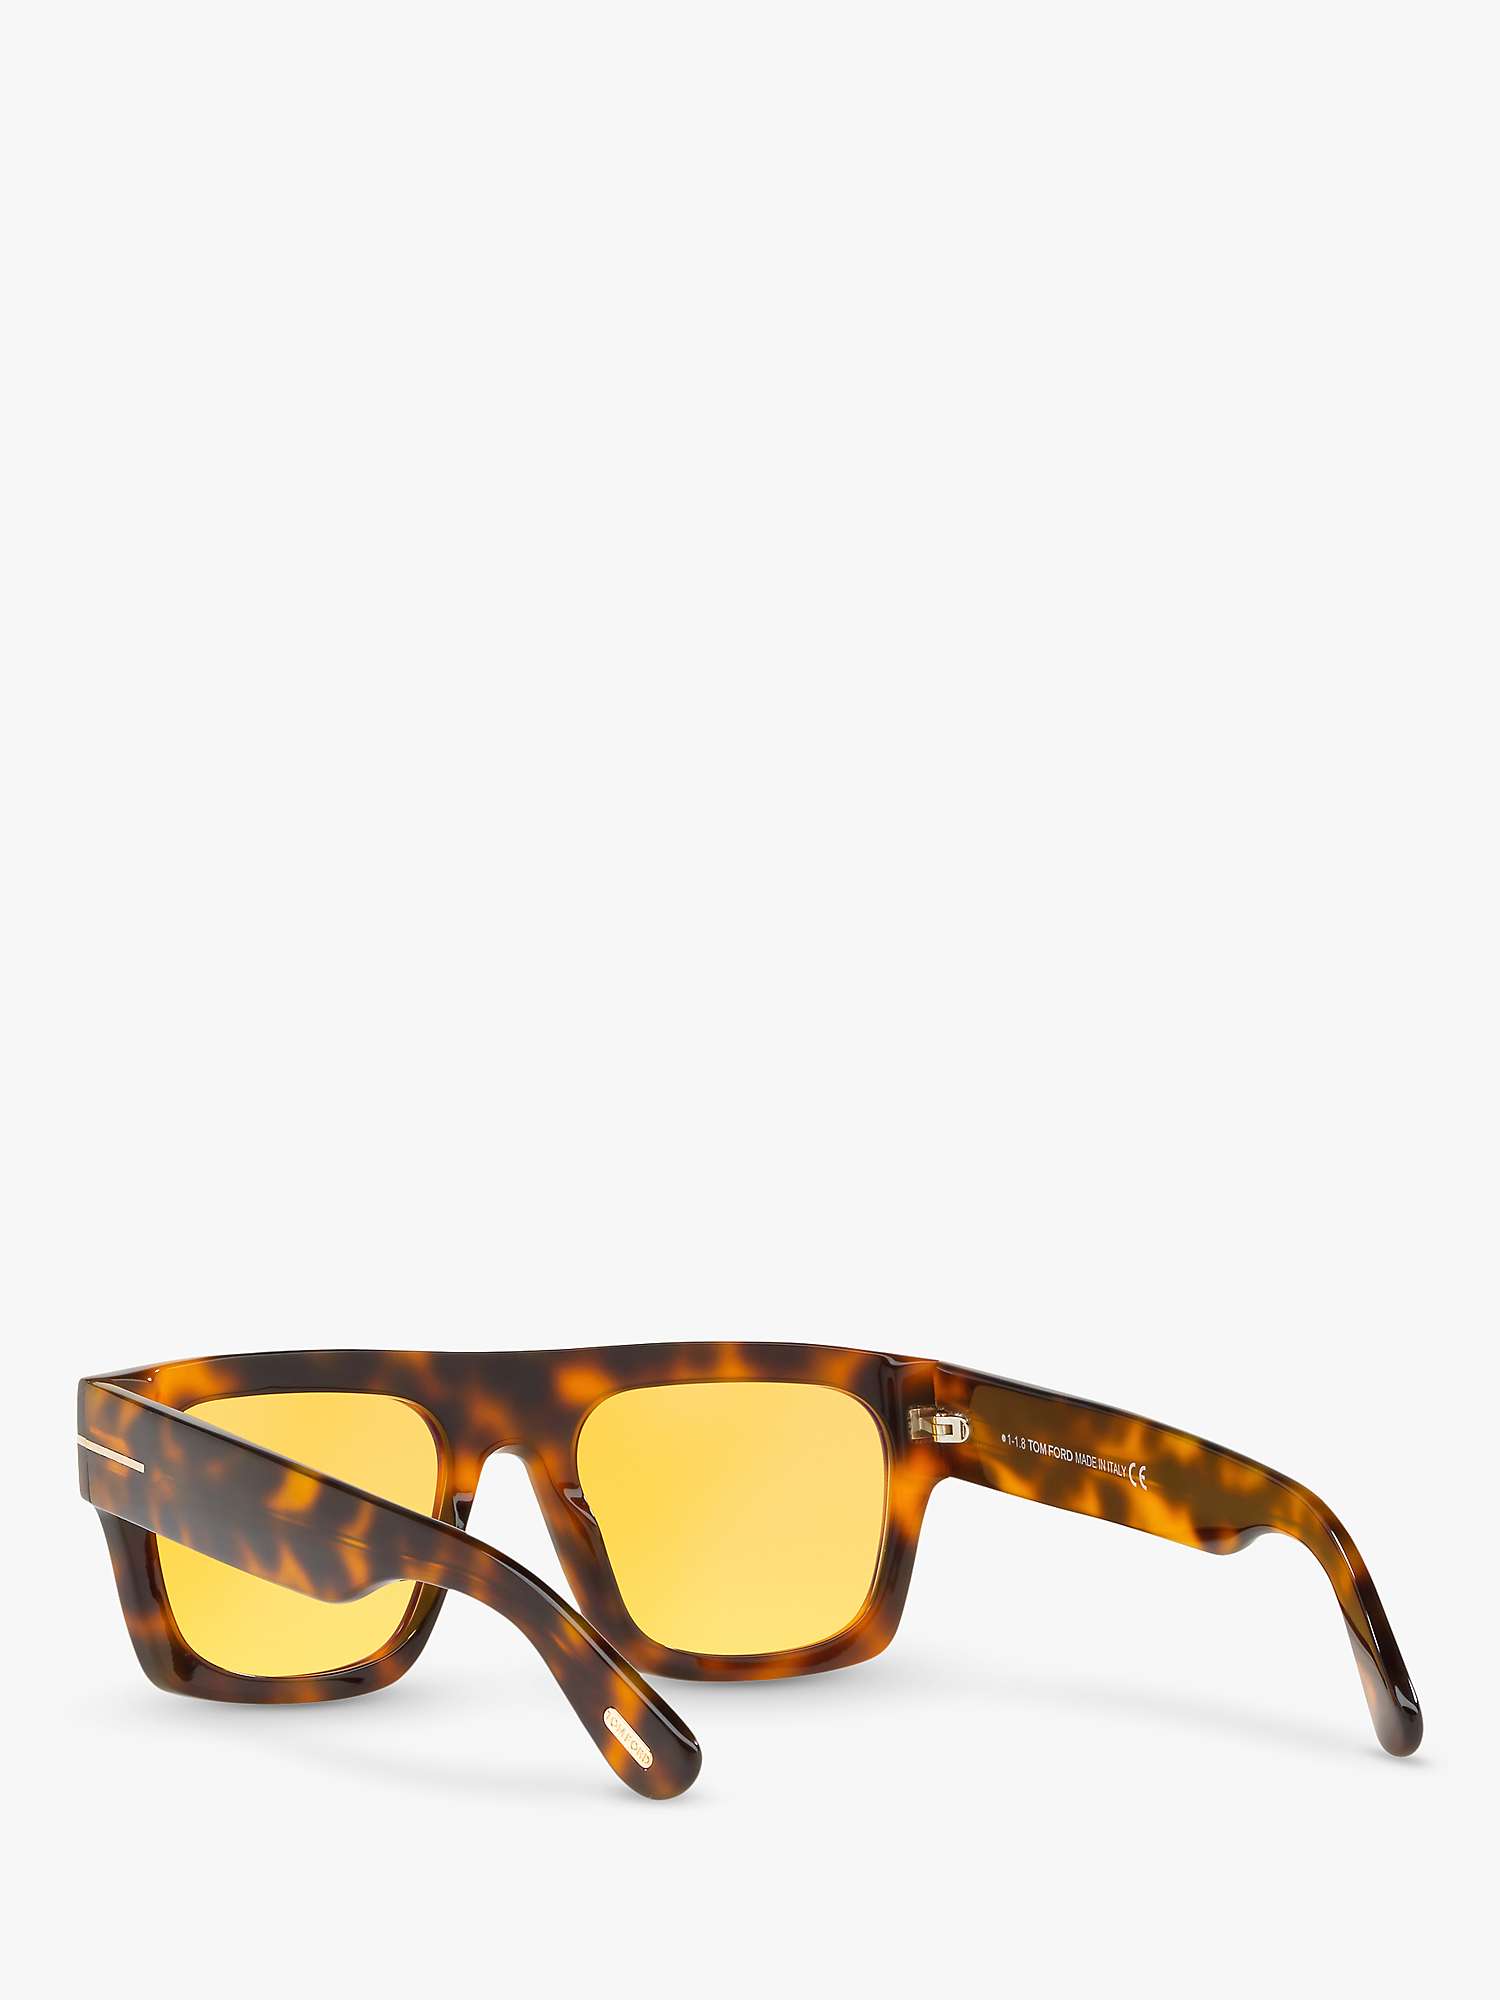 Buy TOM FORD FT0711 Men's Fausto Square Sunglasses Online at johnlewis.com